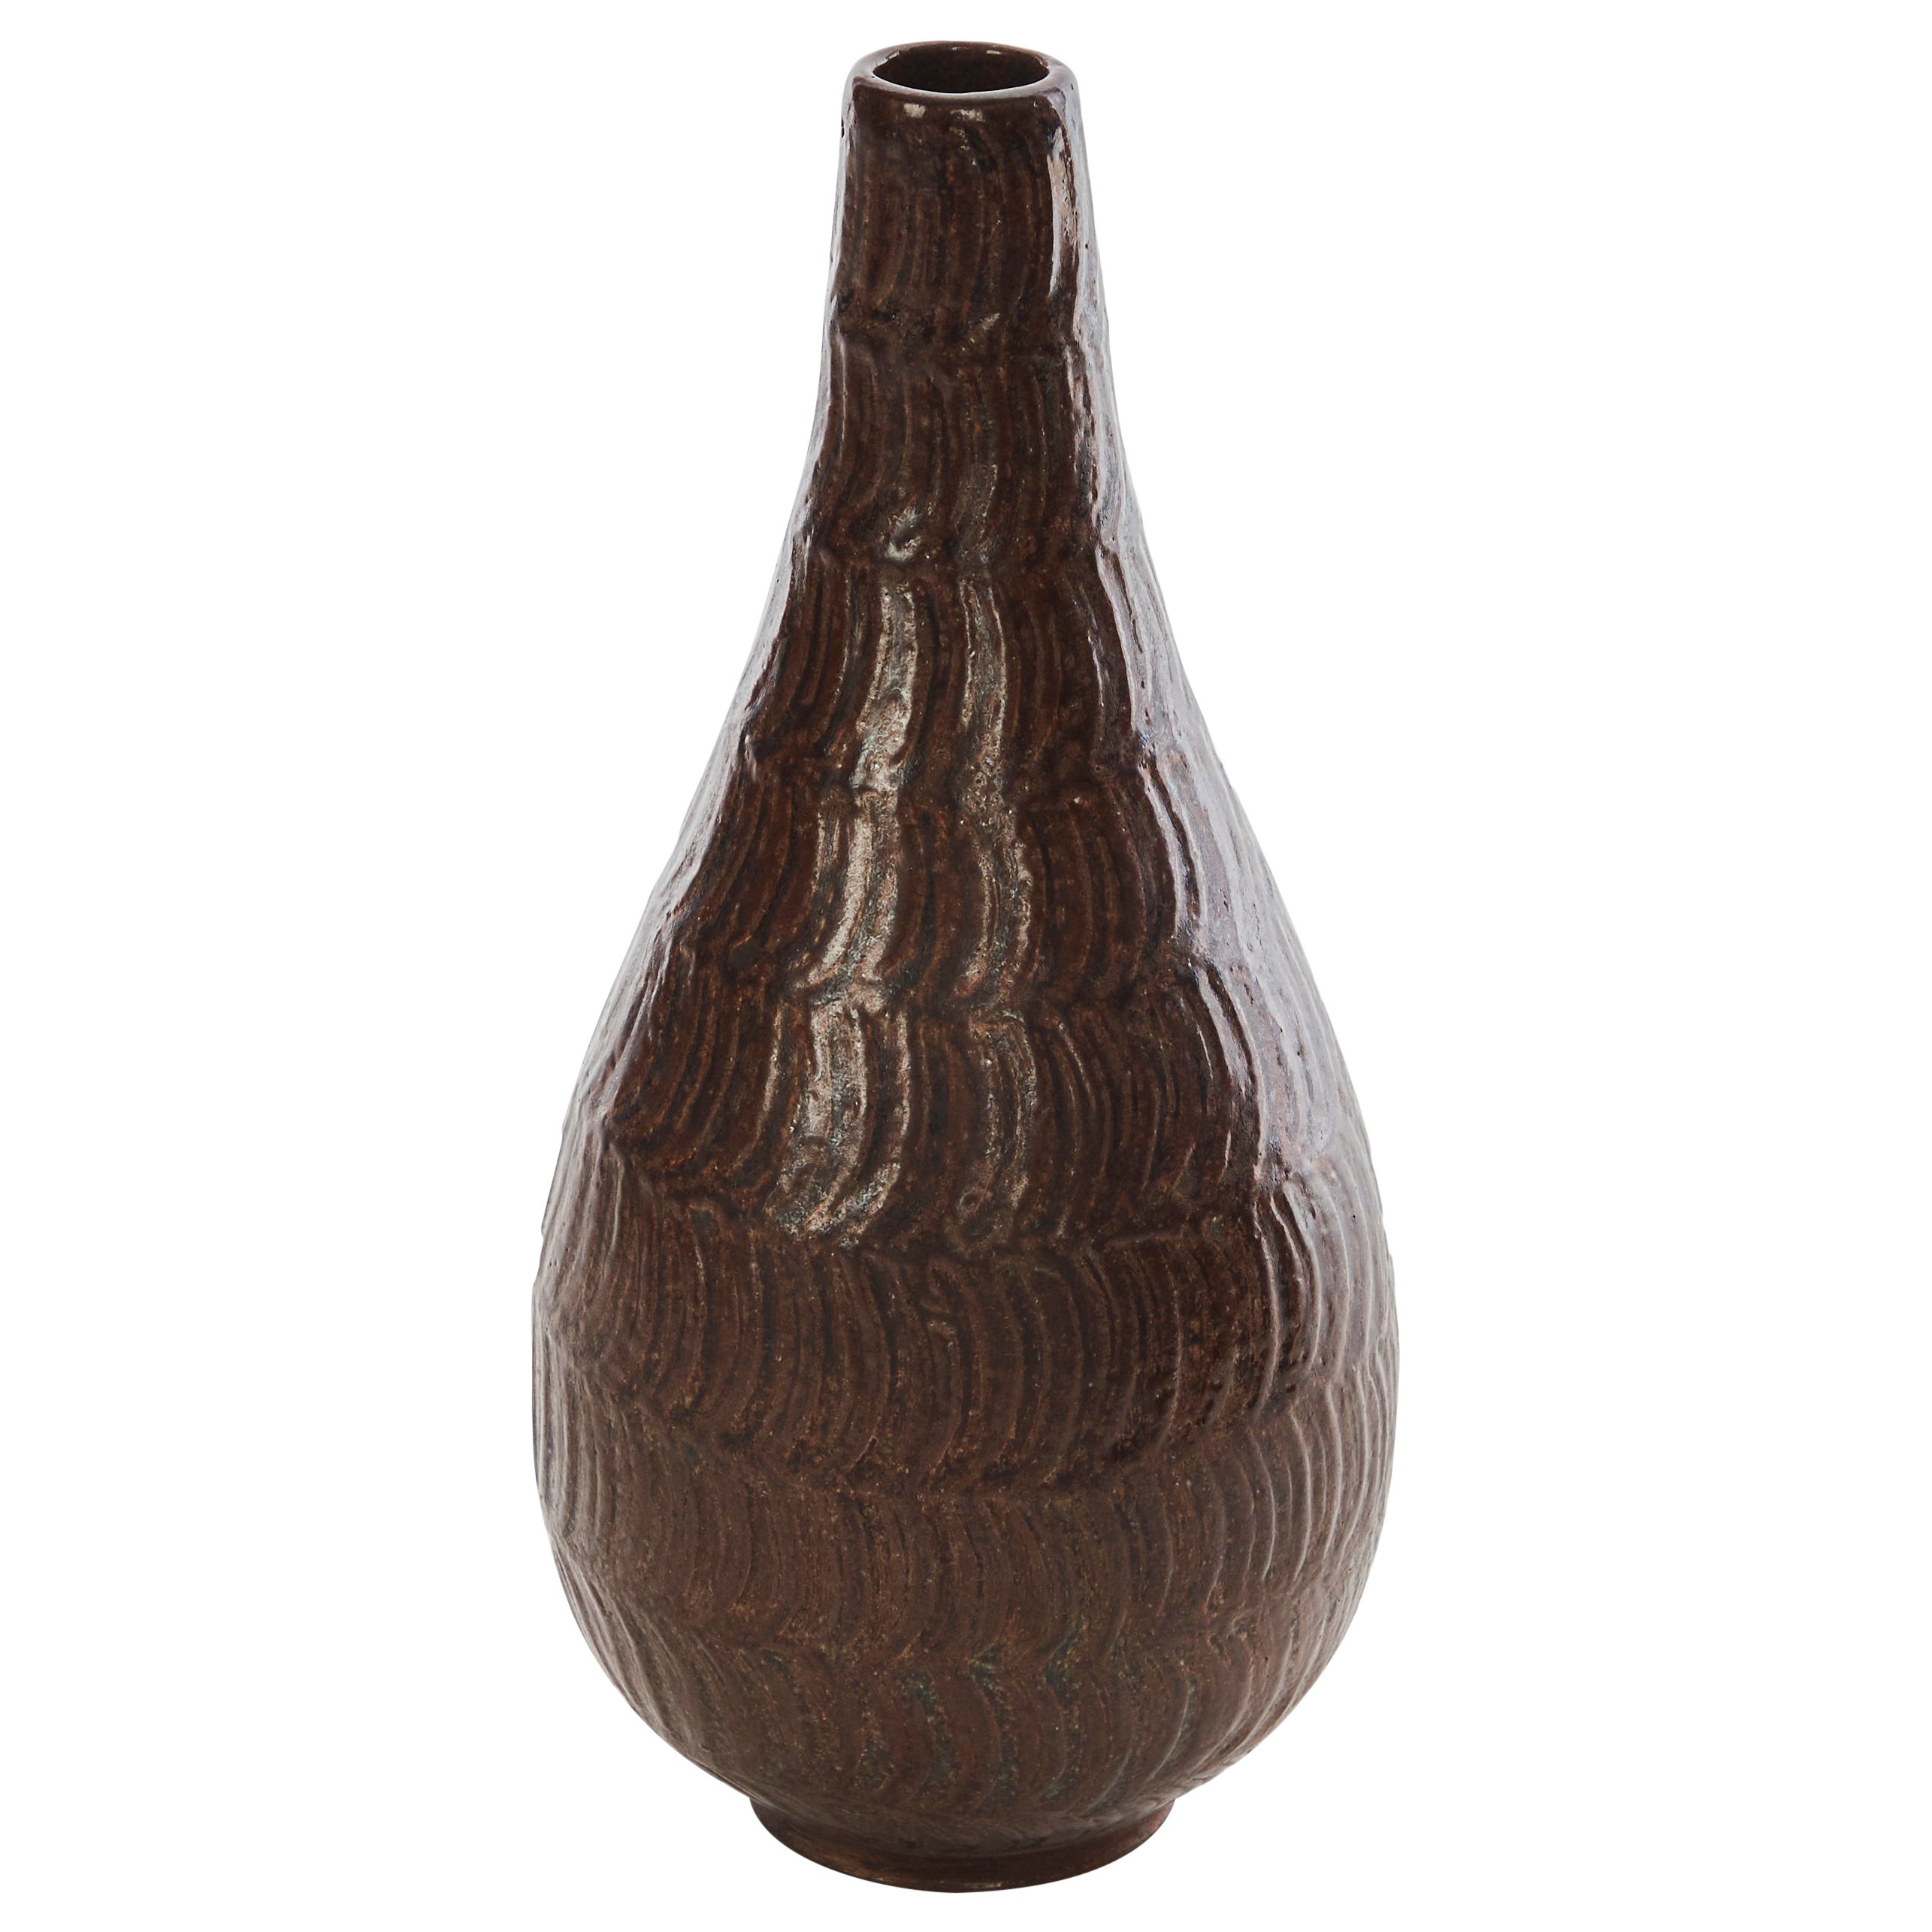 Wallåkra, Mid-Century Stoneware Vase, Sweden, 1950s For Sale